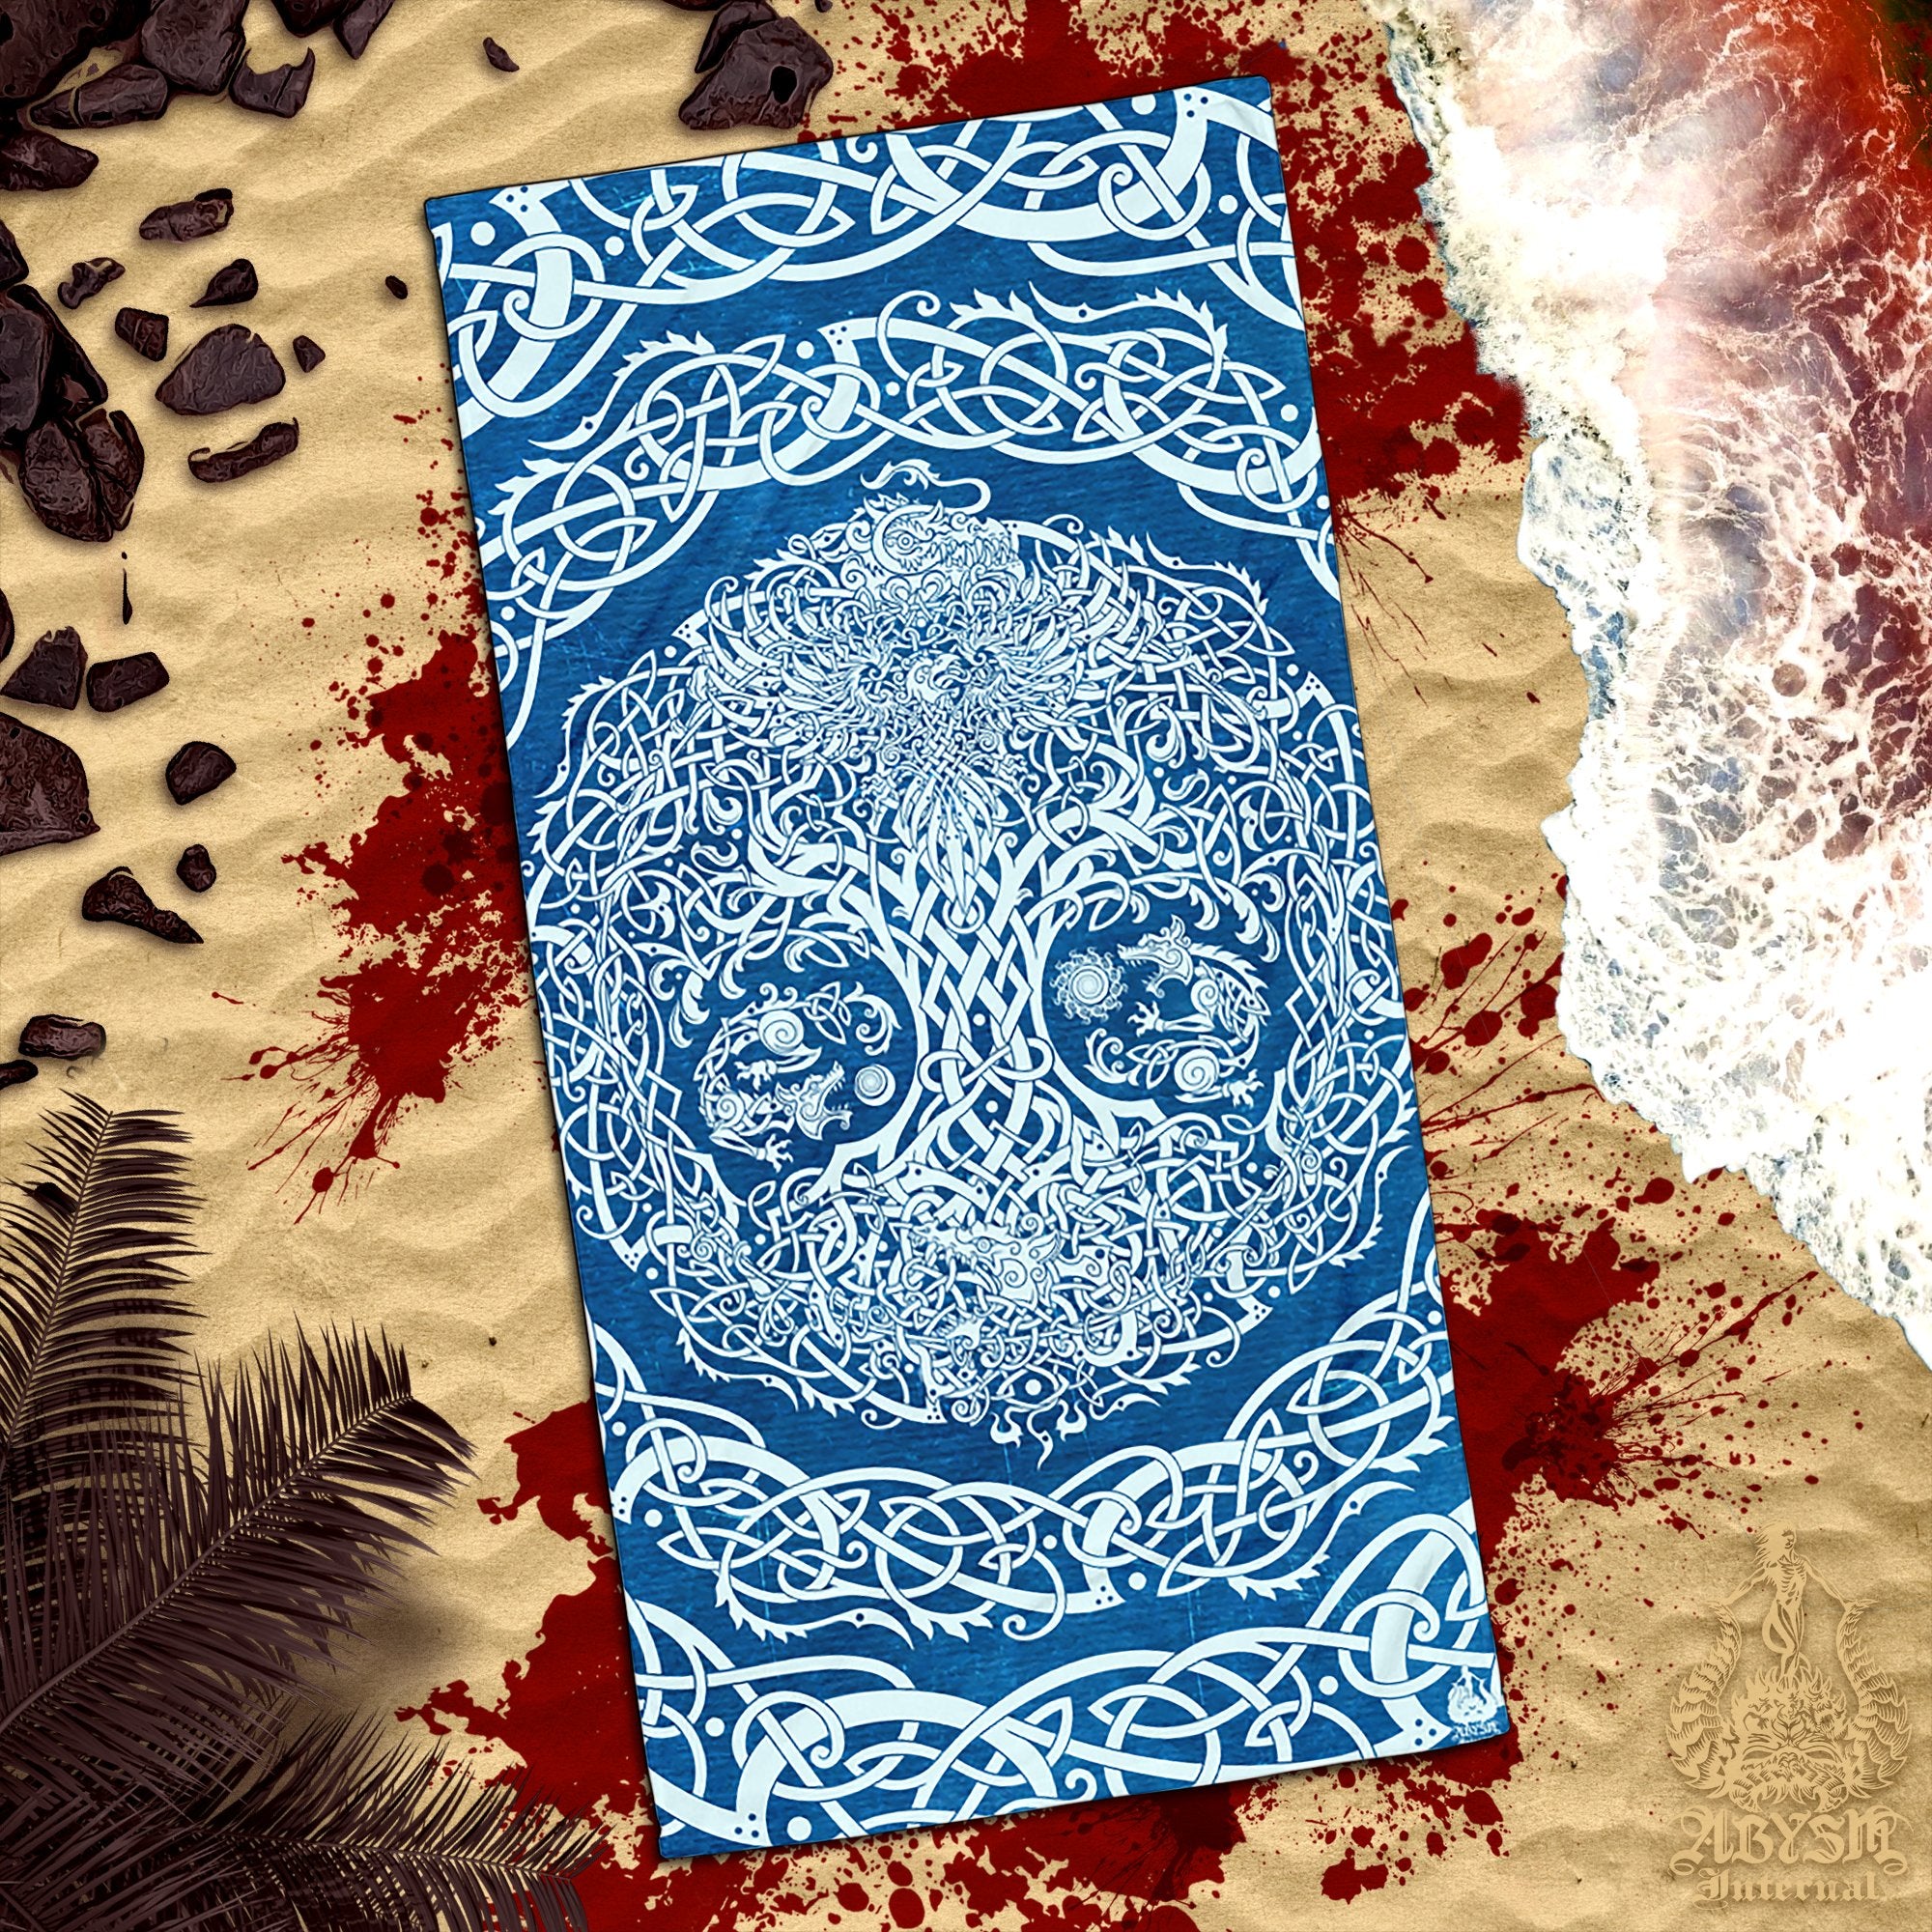 ALL Yggdrasil Beach Towel Designs, Viking Tree of Life, Norse Mythology Art - 13 Colors - Abysm Internal